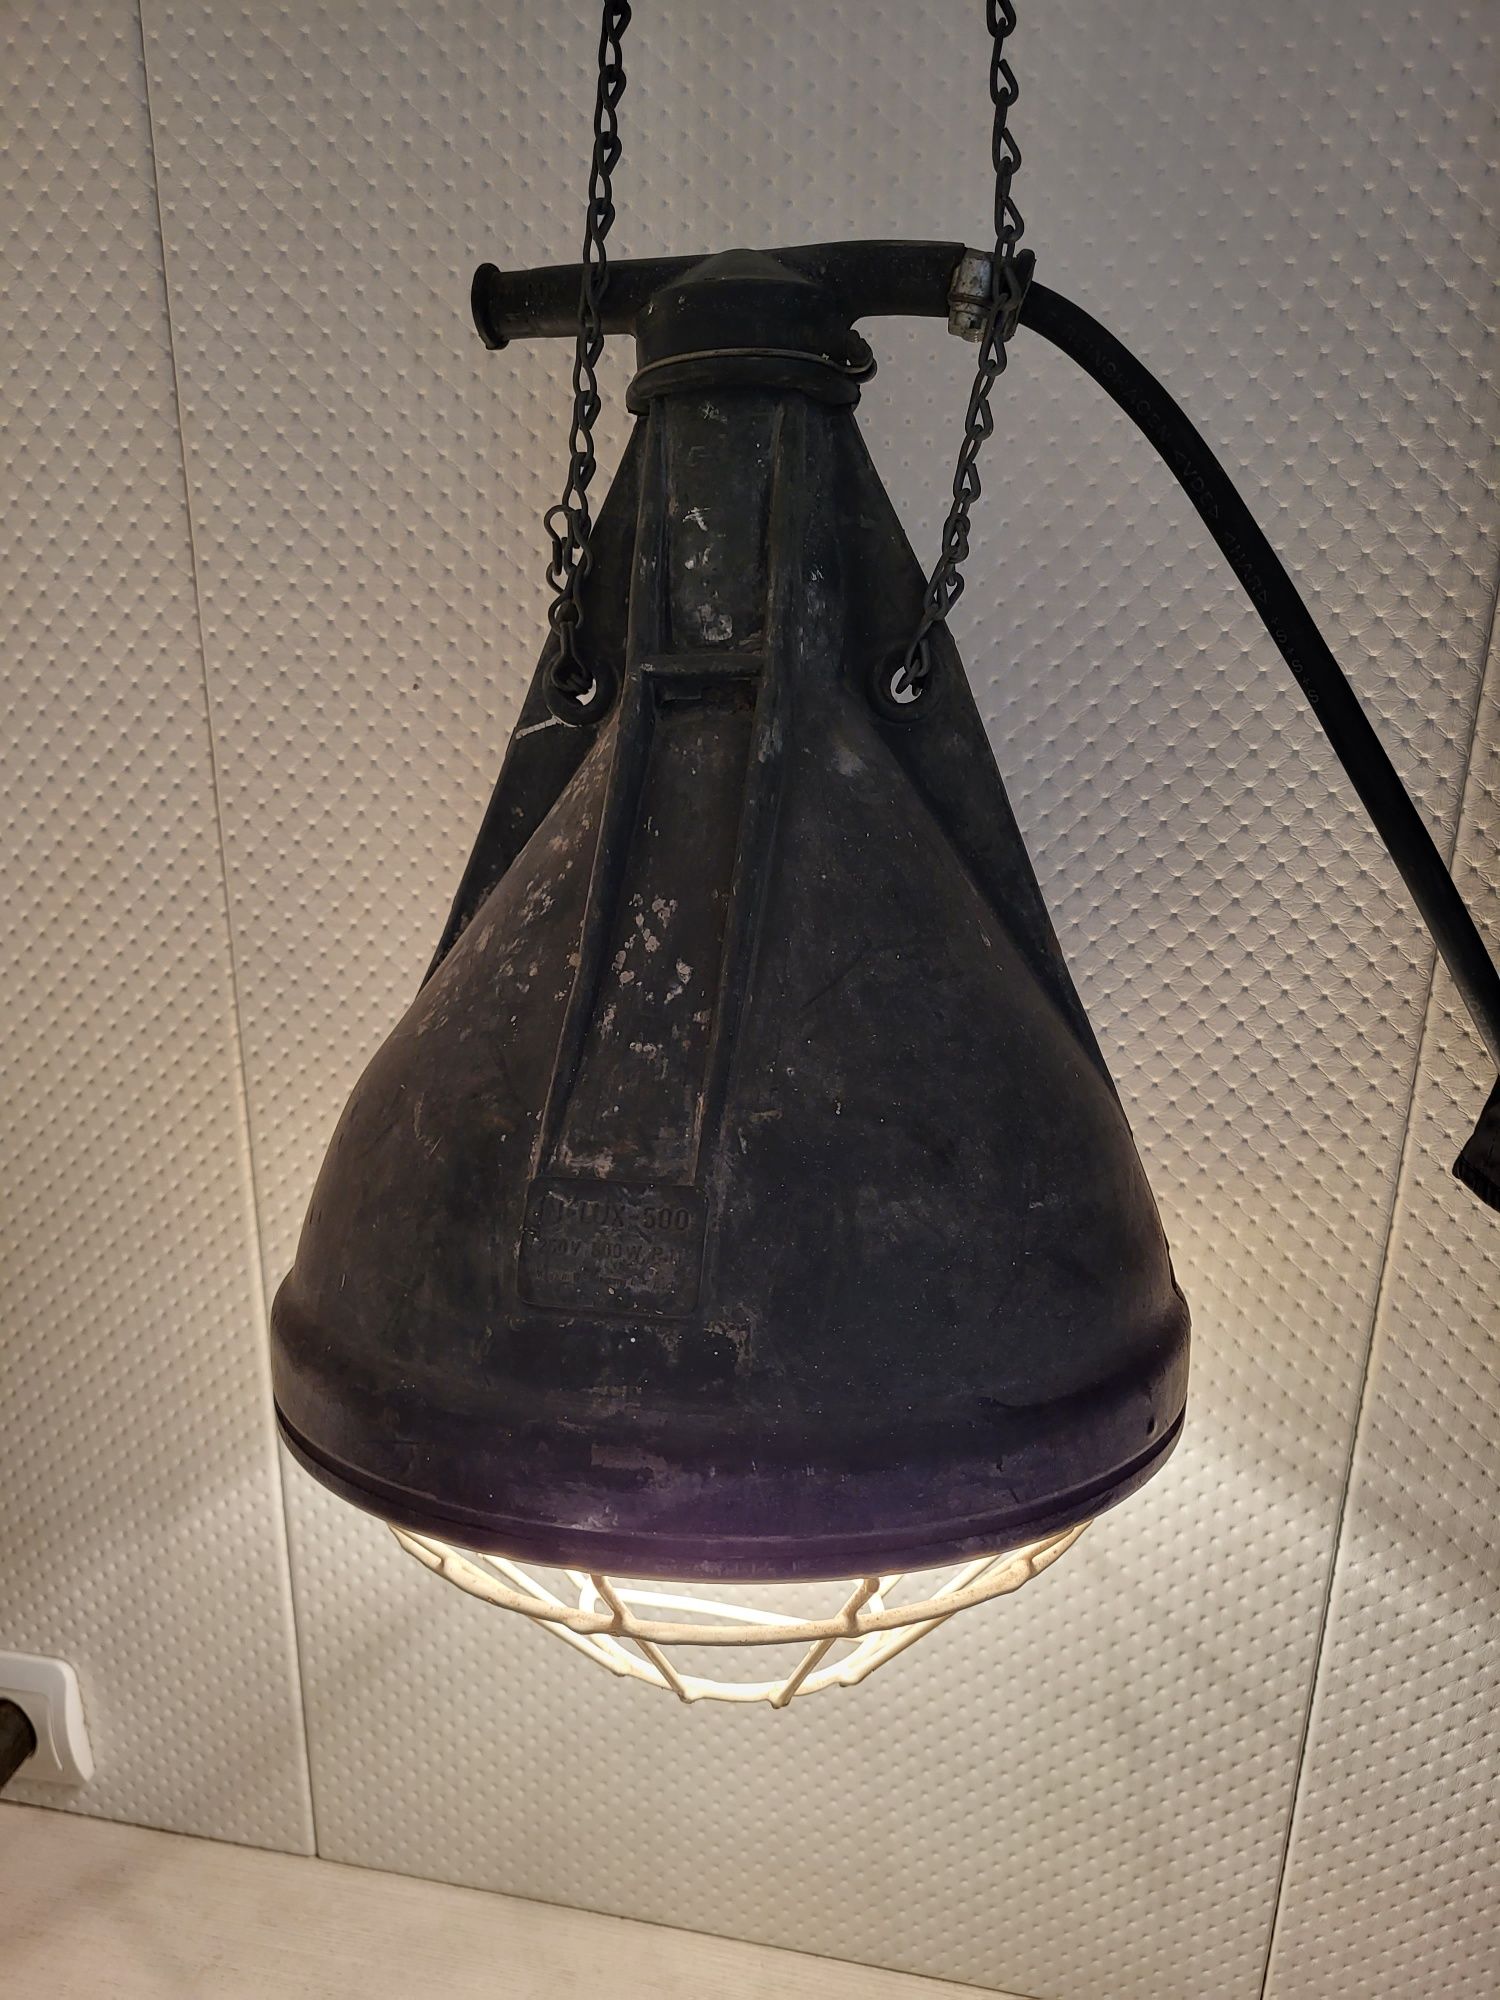 Промишлена миньорска немска лампа IN-LUX 500W